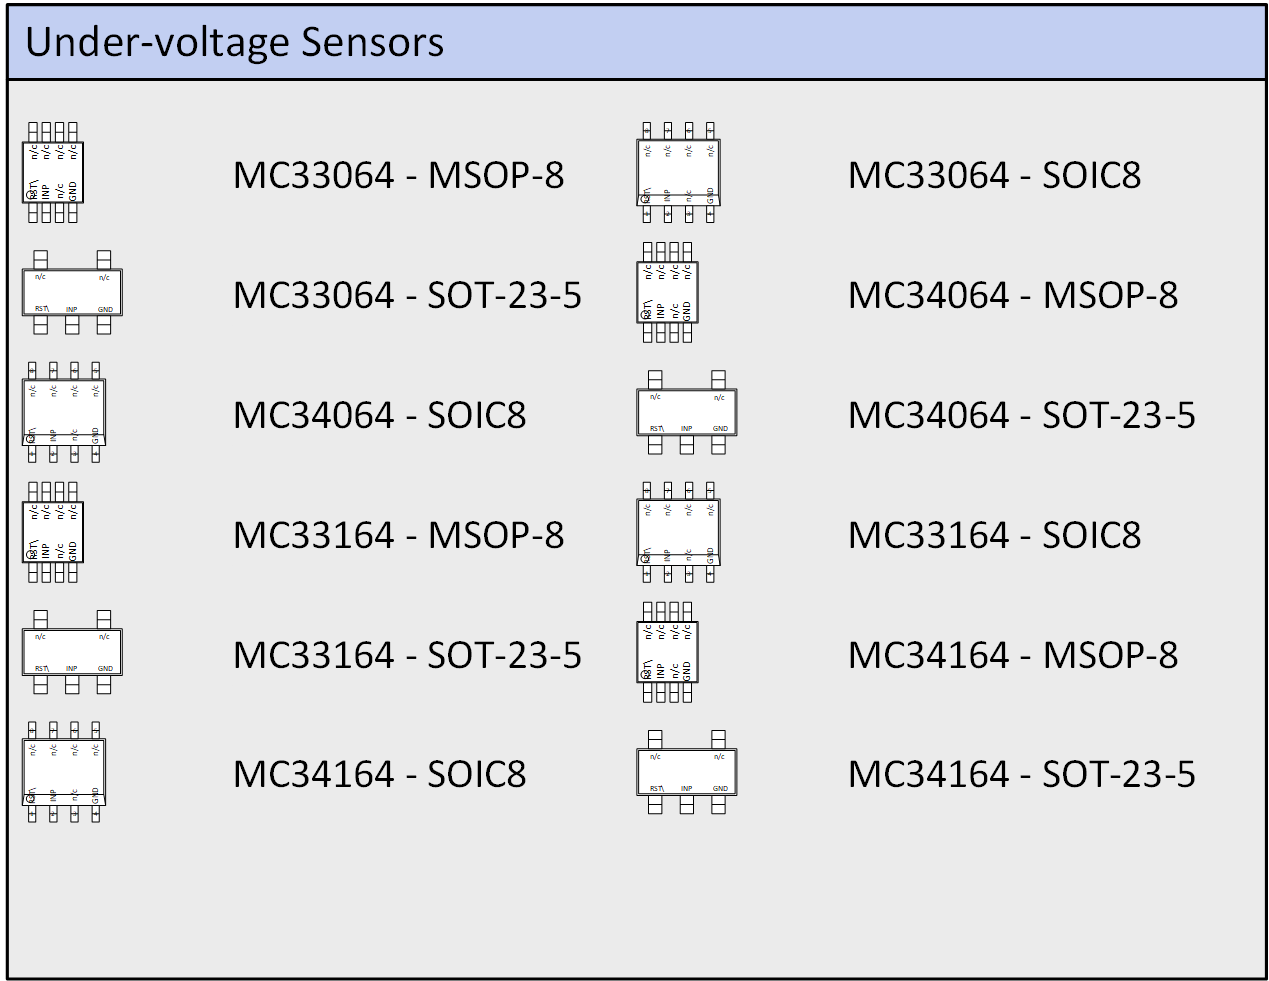 Under-voltage sensors